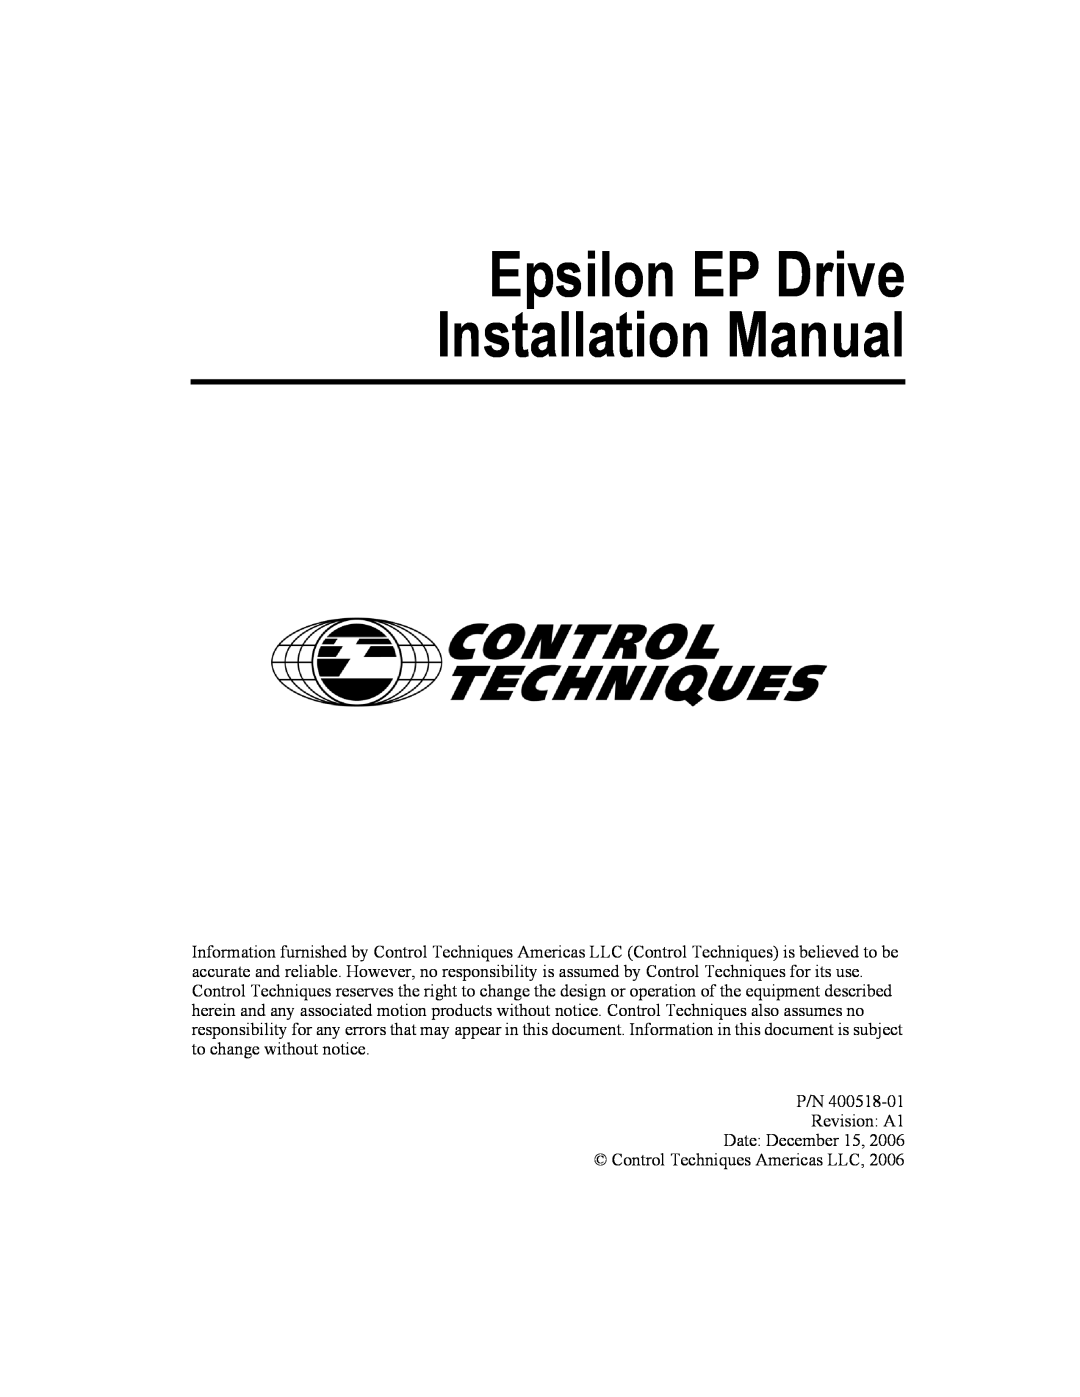 Emerson 400518-01 installation manual Epsilon EP Drive, Installation Manual 